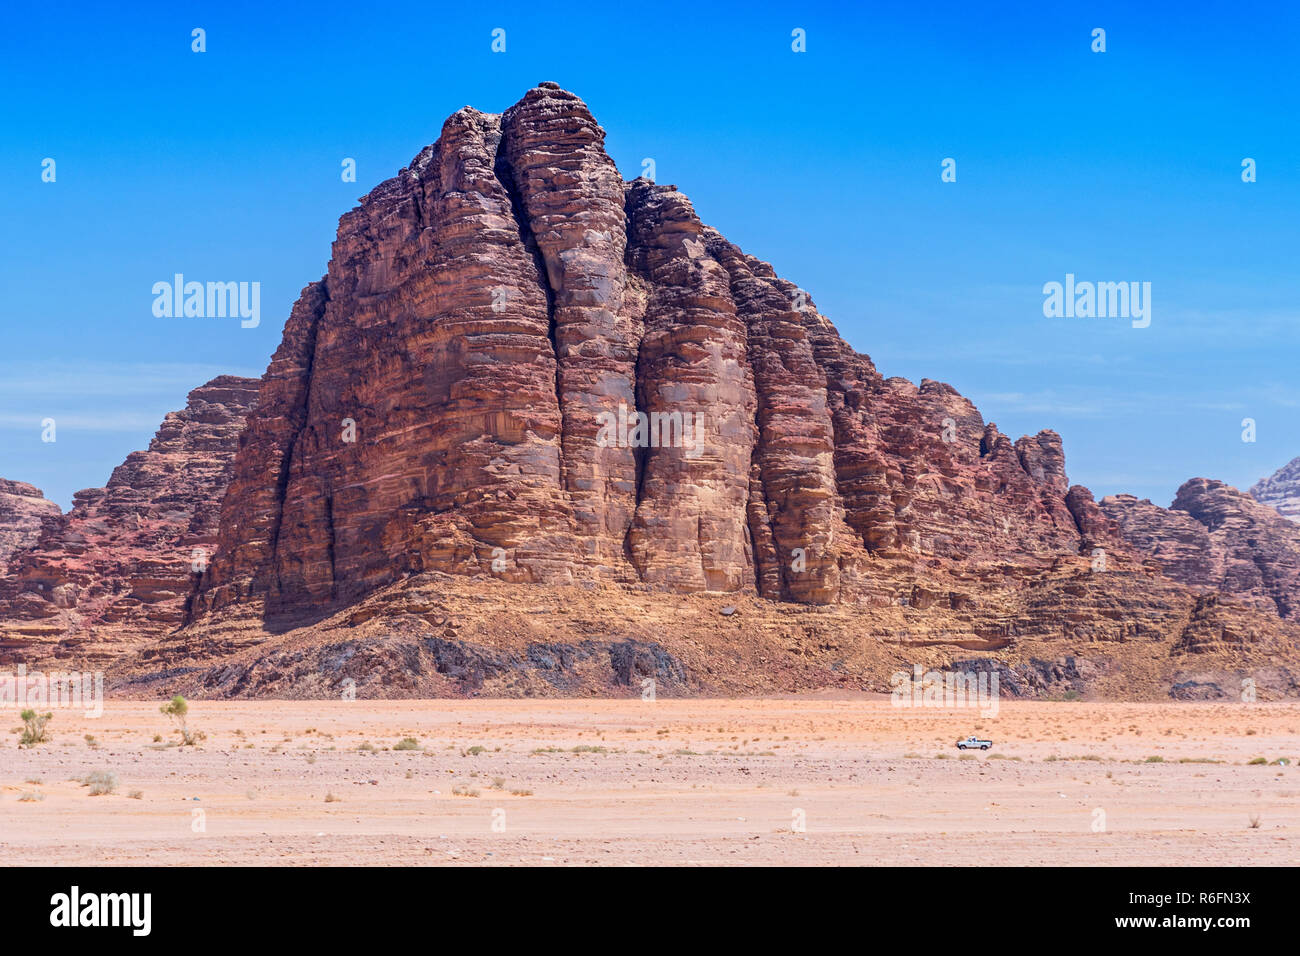 The Seven Pillars Of Wisdom Rock Formation, Wadi Rum, Jordan Stock Photo